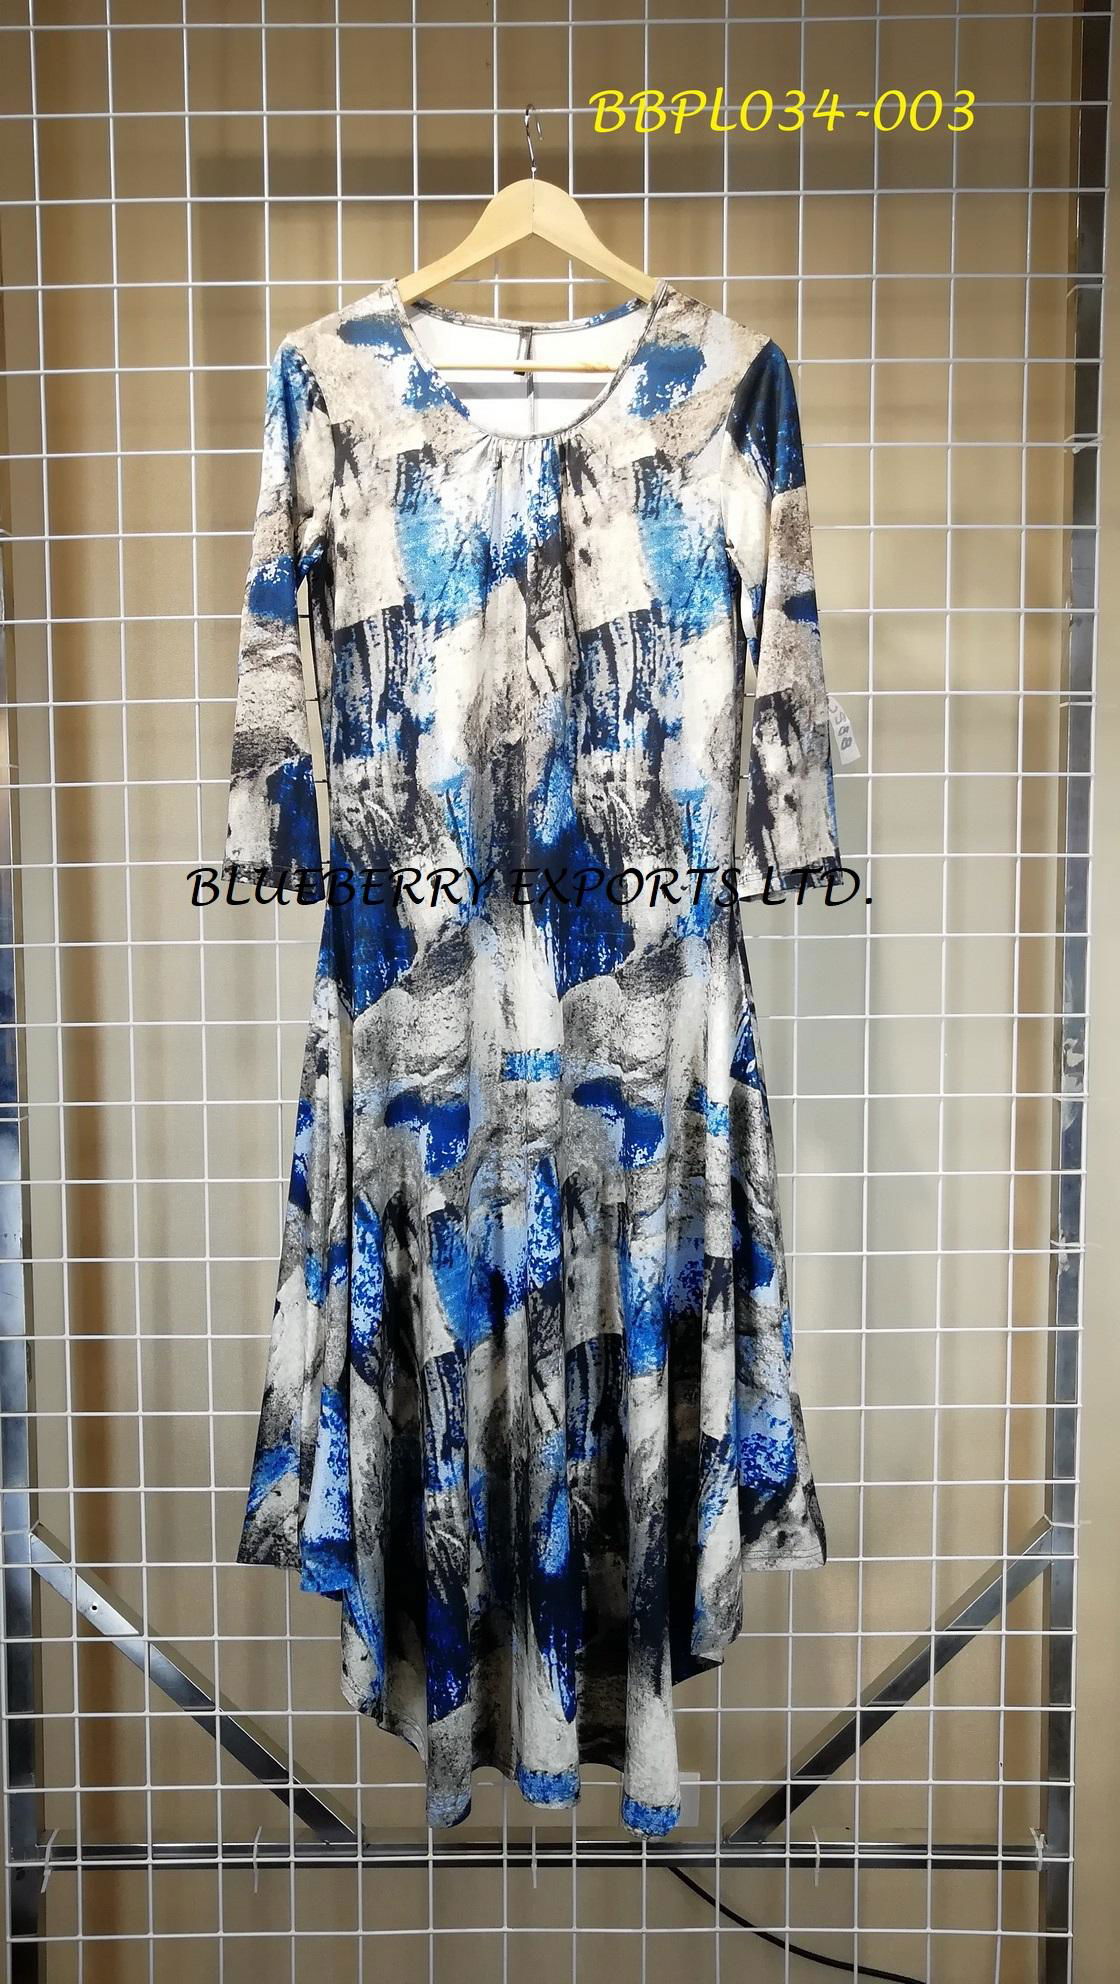 Winter Tunic dress with pattern design #BBPL034-003